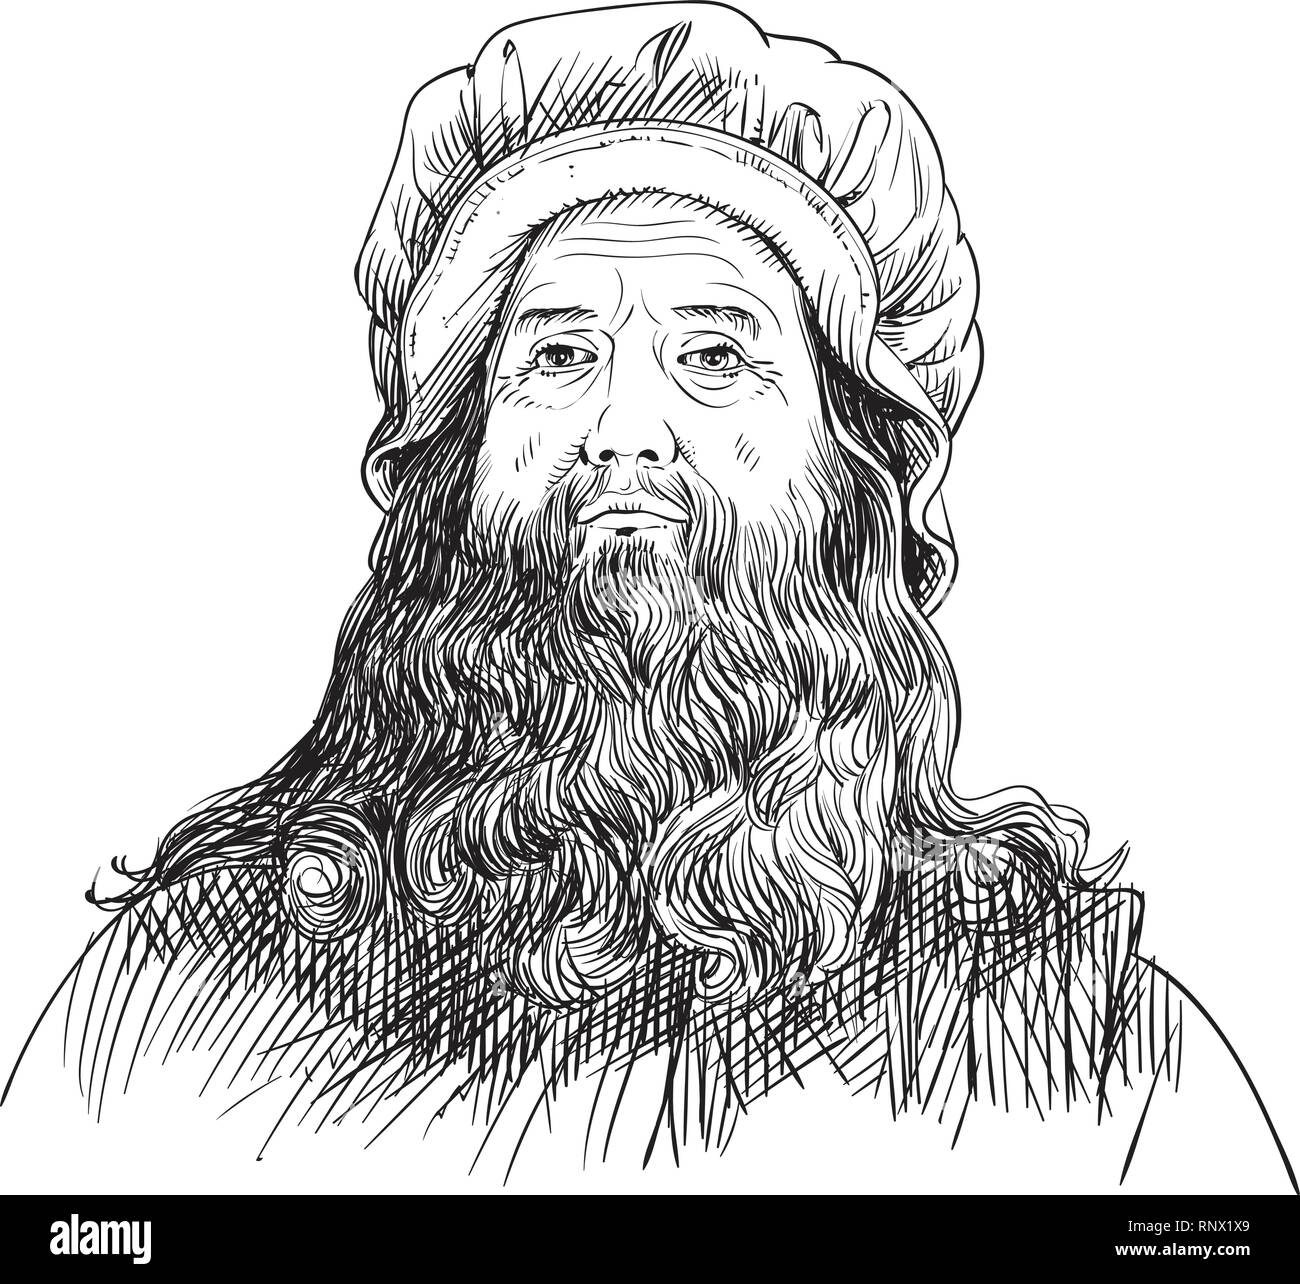 Leonardo Da Vinci portrait in line art illustration. Stock Vector